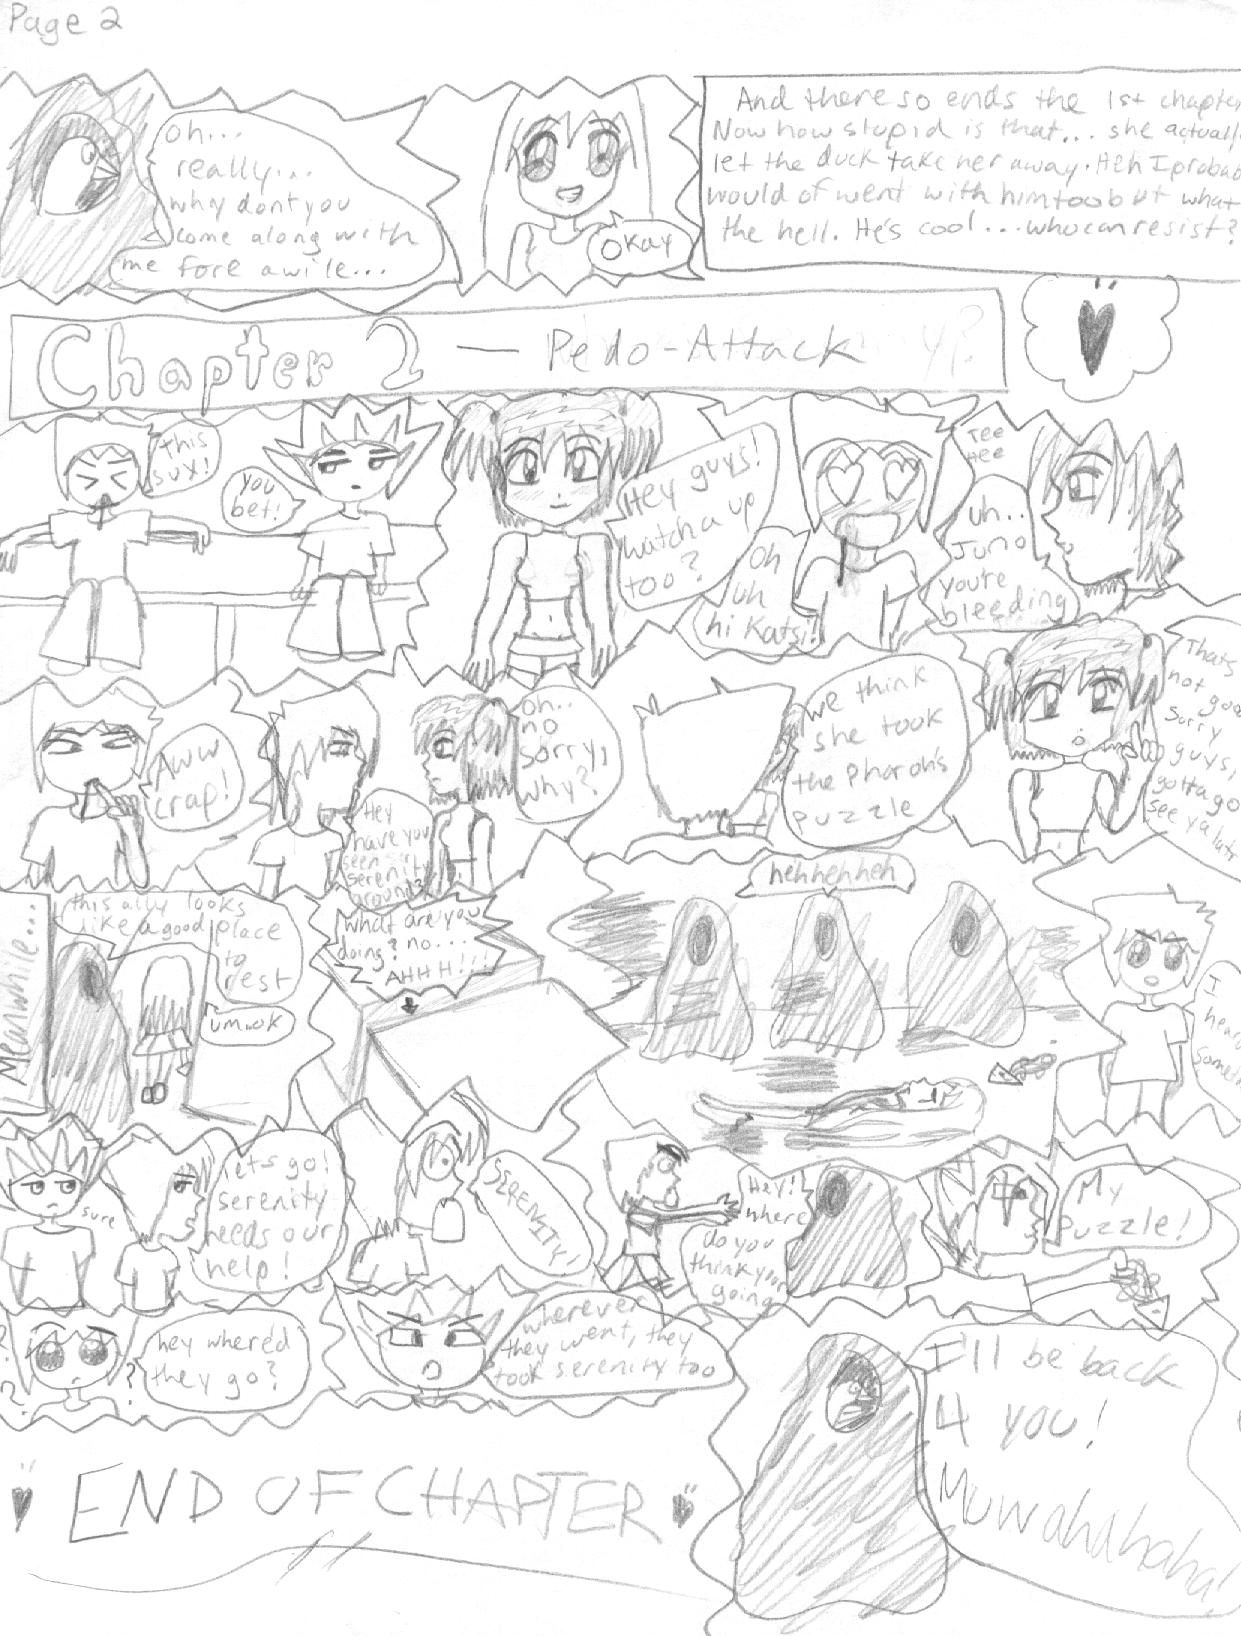 Yu-Gi-Oh comic page 2 by kittykatt107